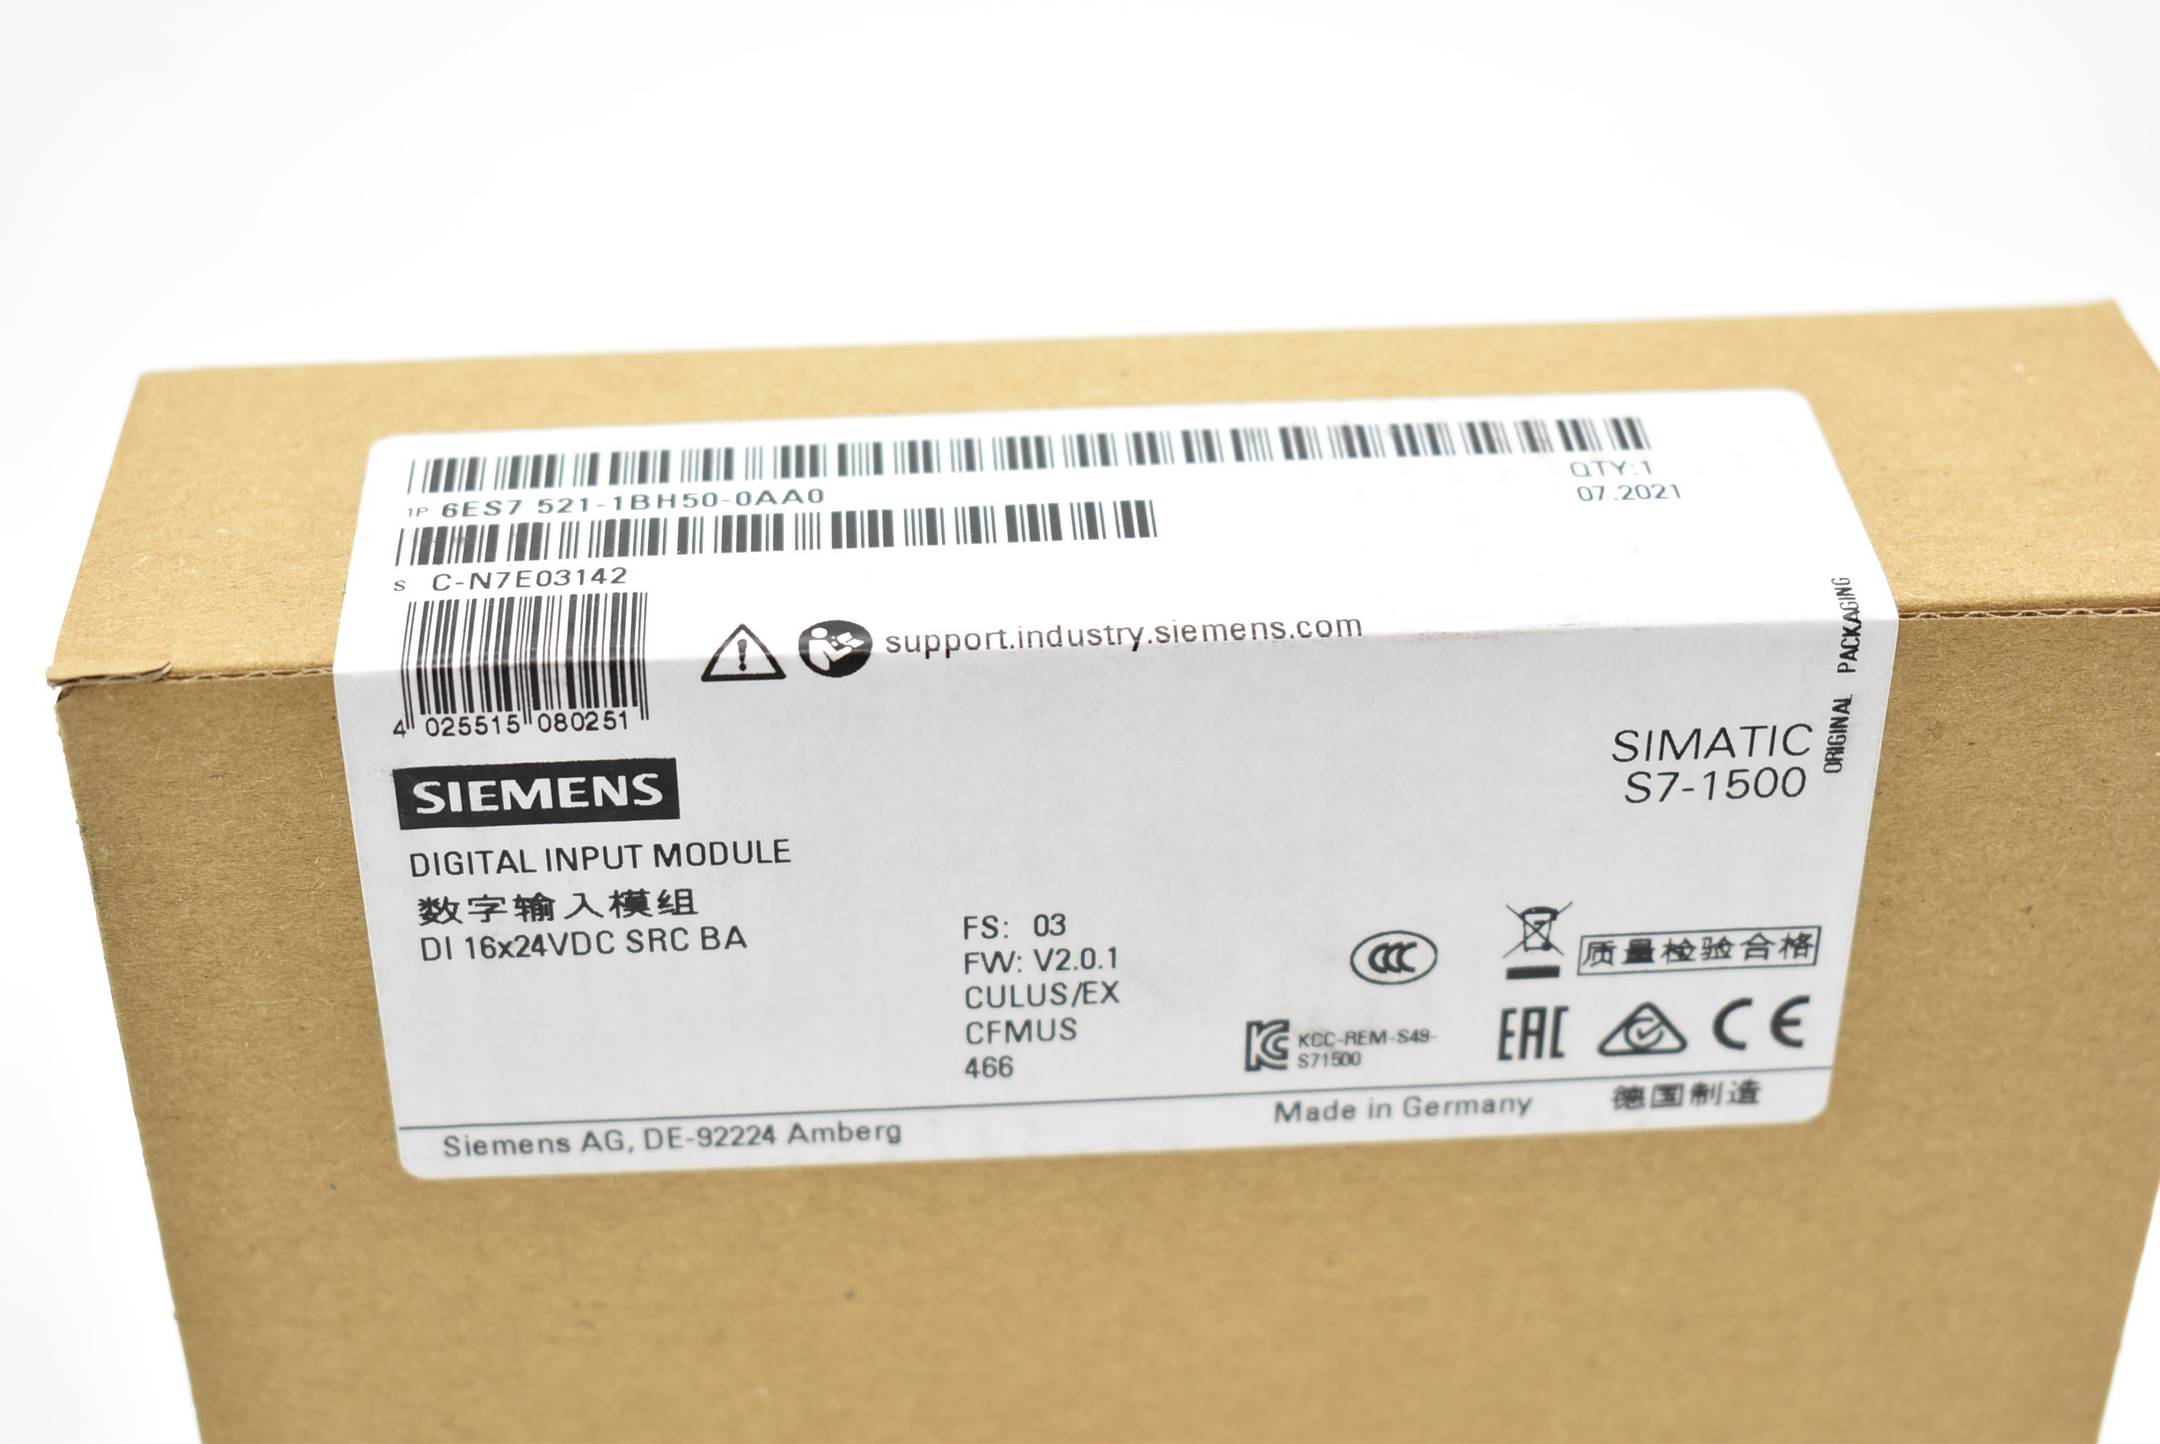 Siemens simatic S7-1500 6ES7 521-1BH50-0AA0 ( 6ES7521-1BH50-0AA0 ) FS3